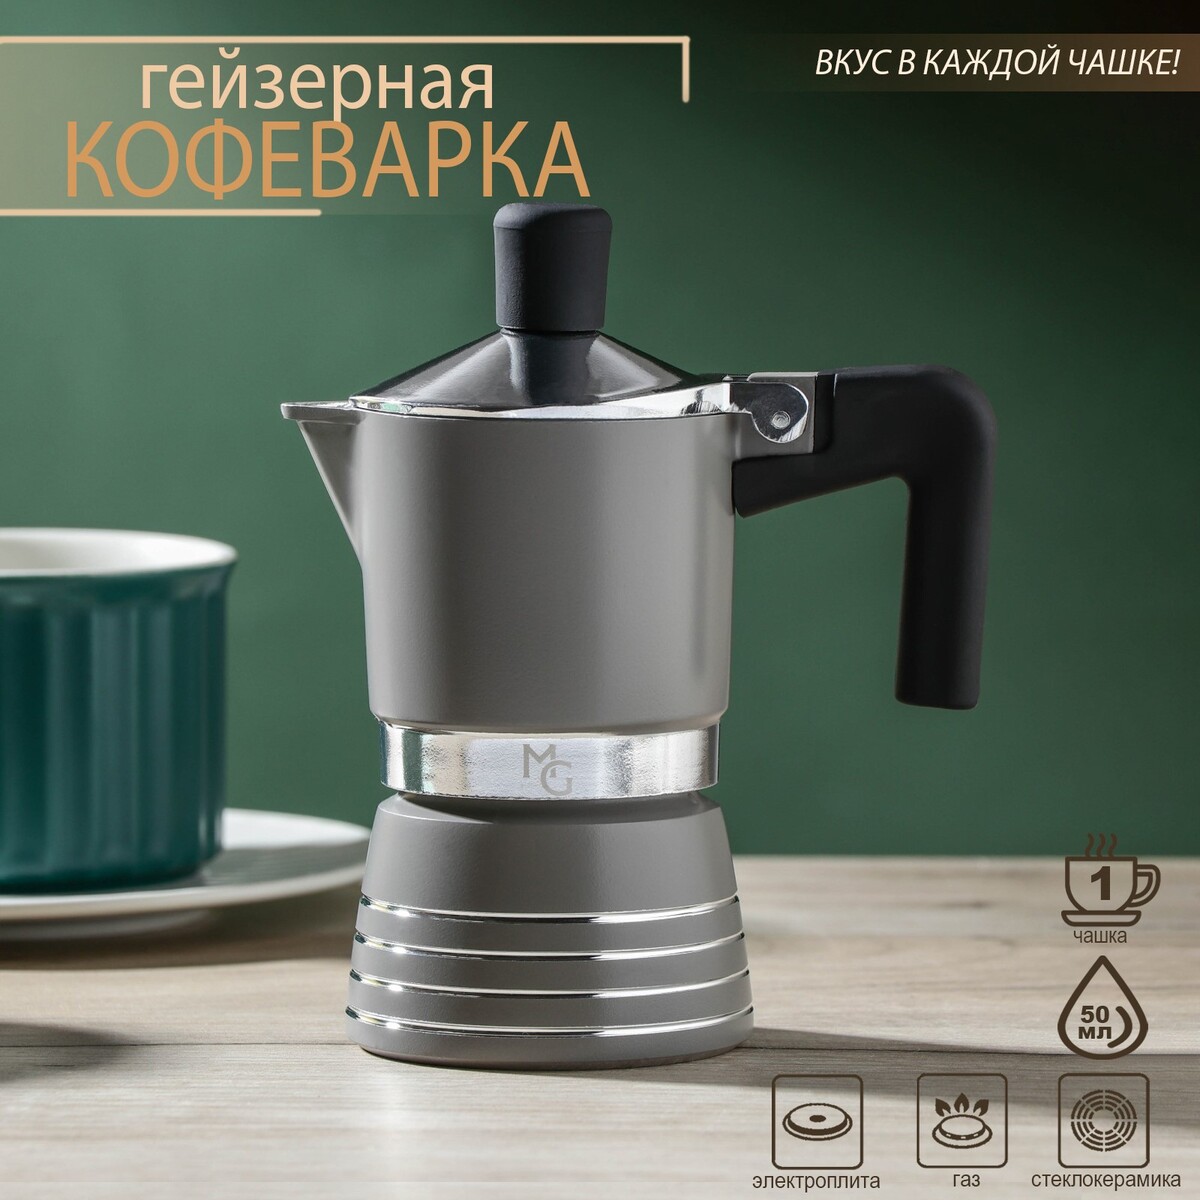 Кофеварка гейзерная magistro moka, на 1 чашку, 50 мл кофеварка гейзерная bialetti moka express 9 порций 1165